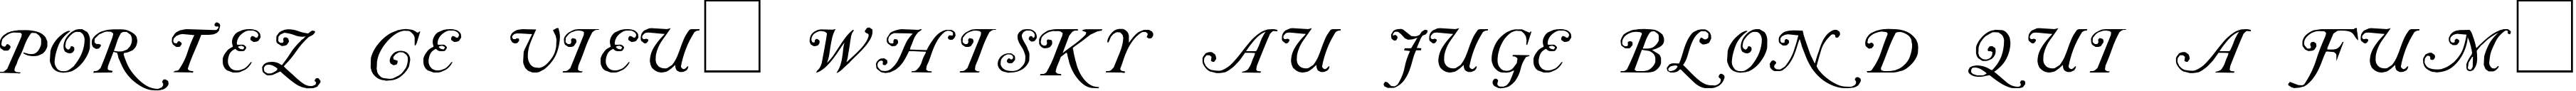 Пример написания шрифтом Caslon Initials текста на французском